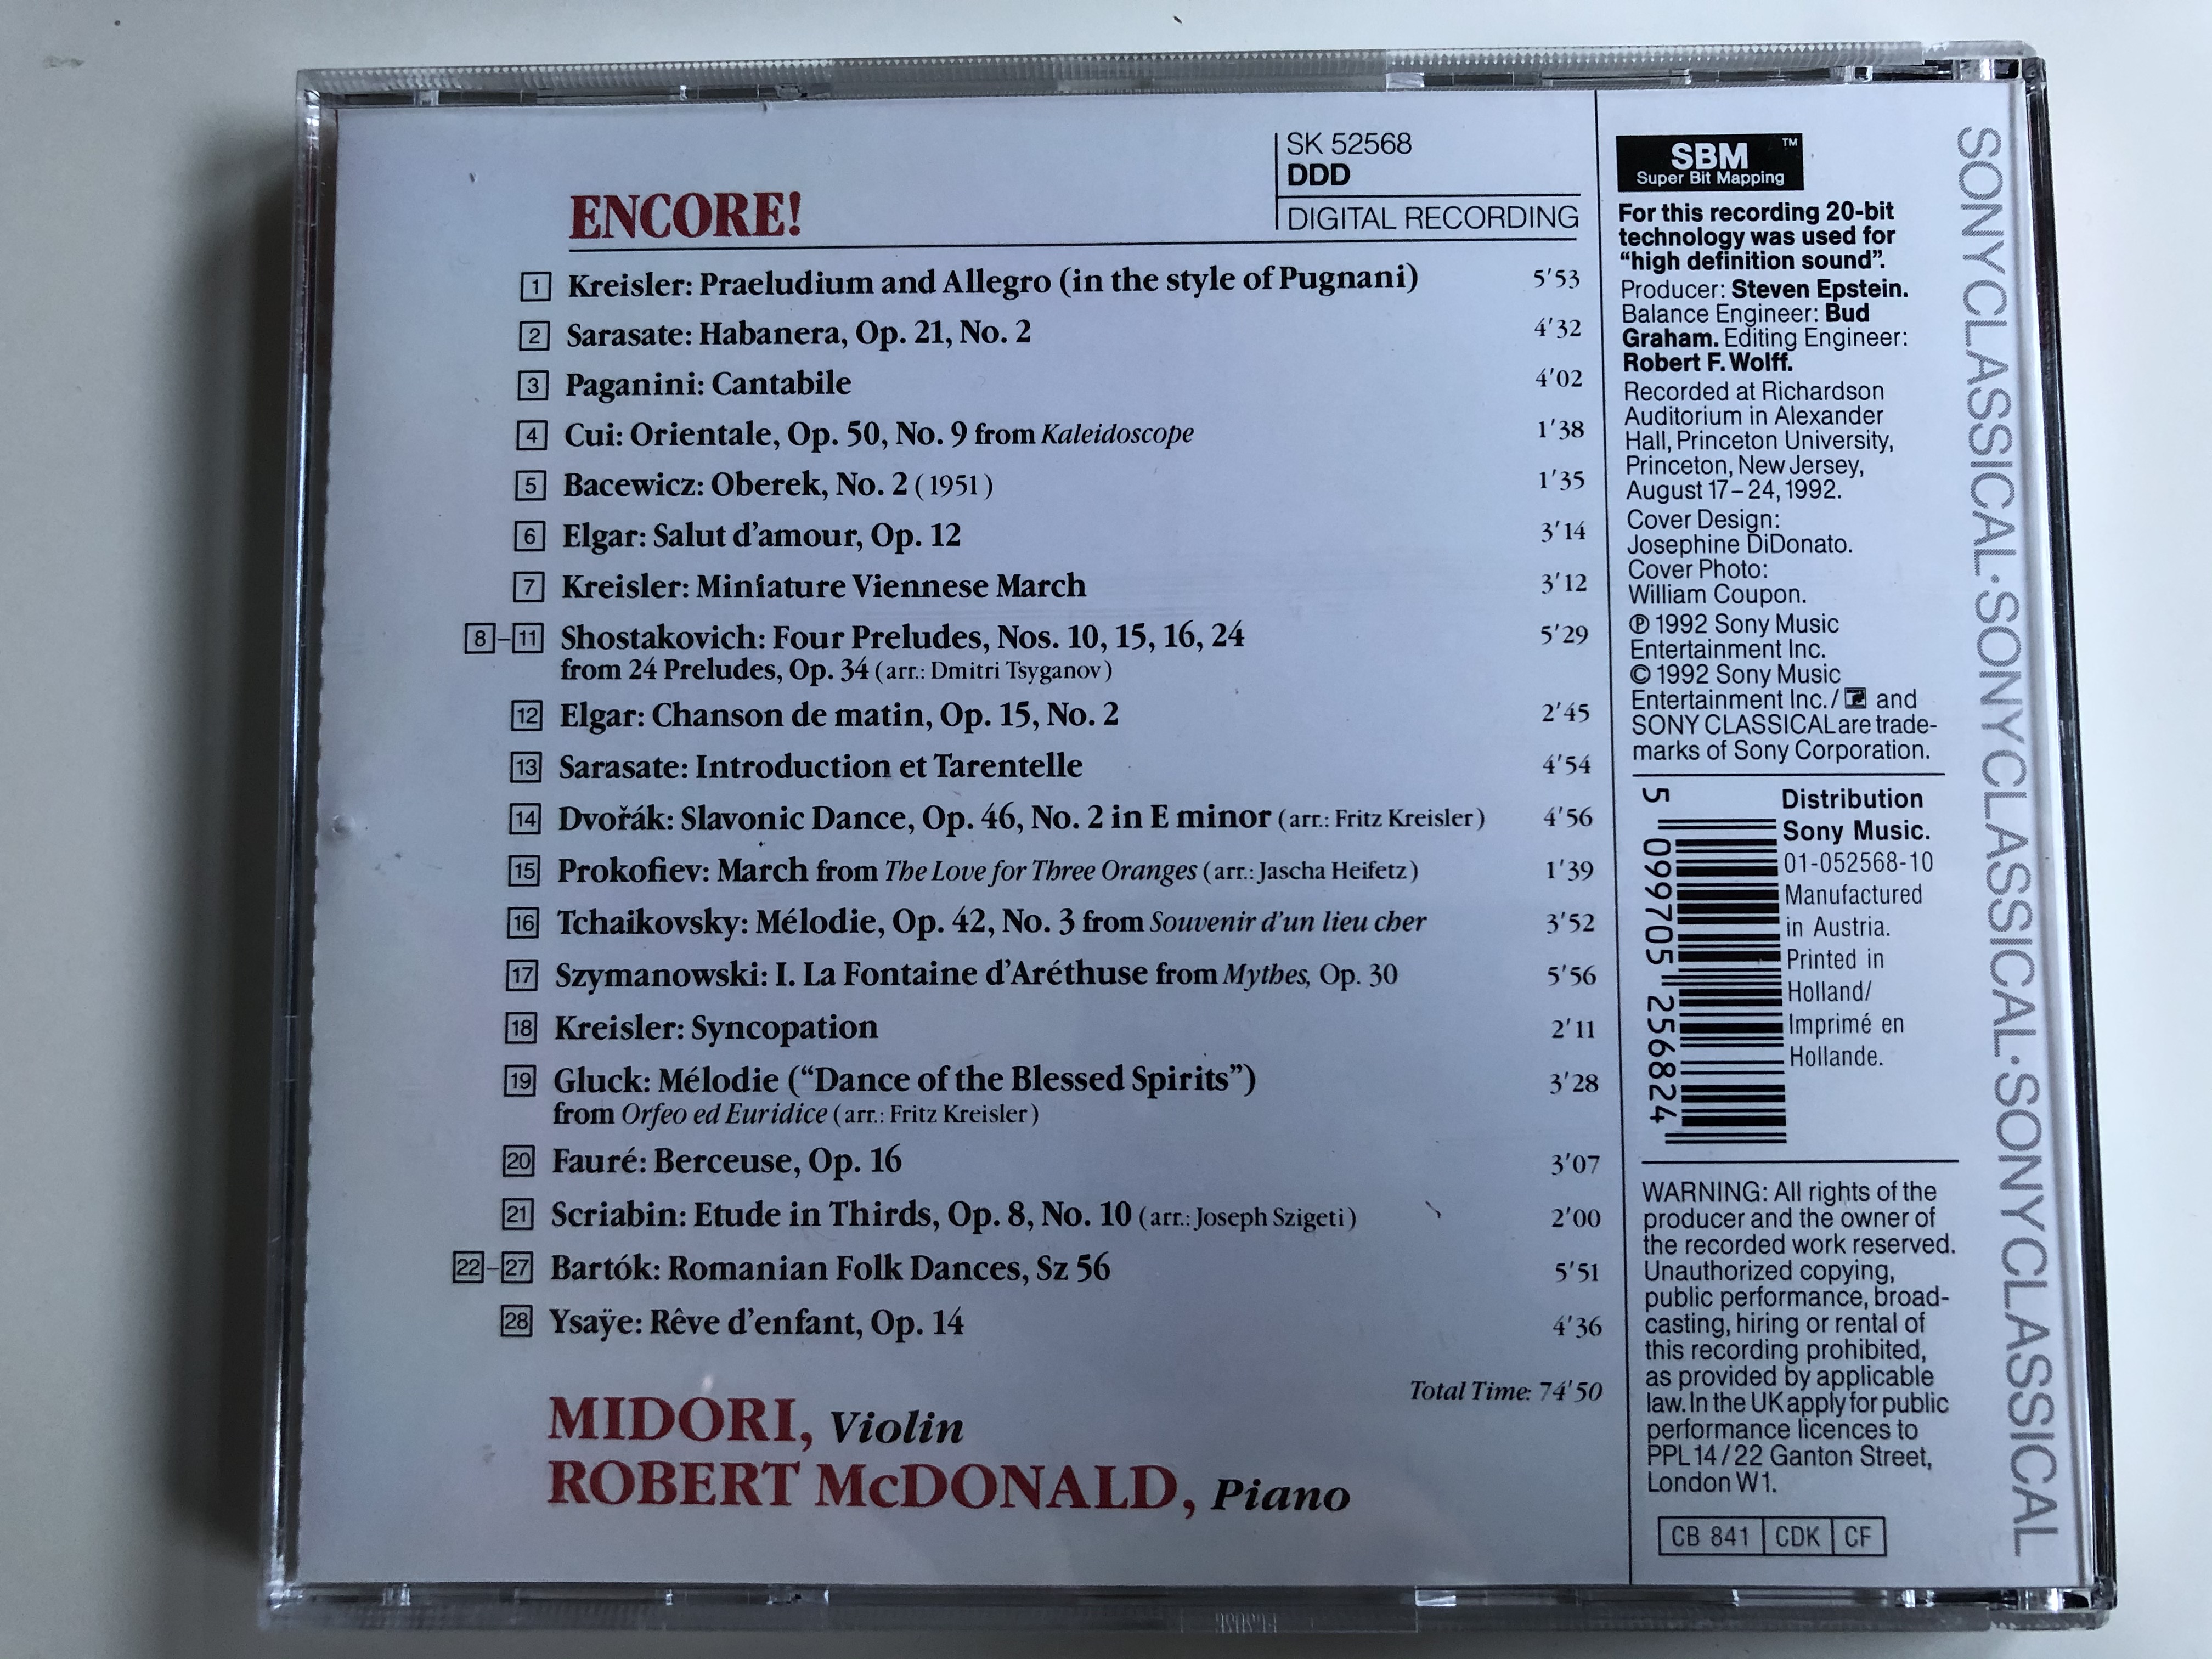 midori-encore-piano-robert-mcdonald-kreisler-paganini-faure-tchaikovsky-sarasate-sony-classical-audio-cd-1992-sk-52568-10-.jpg